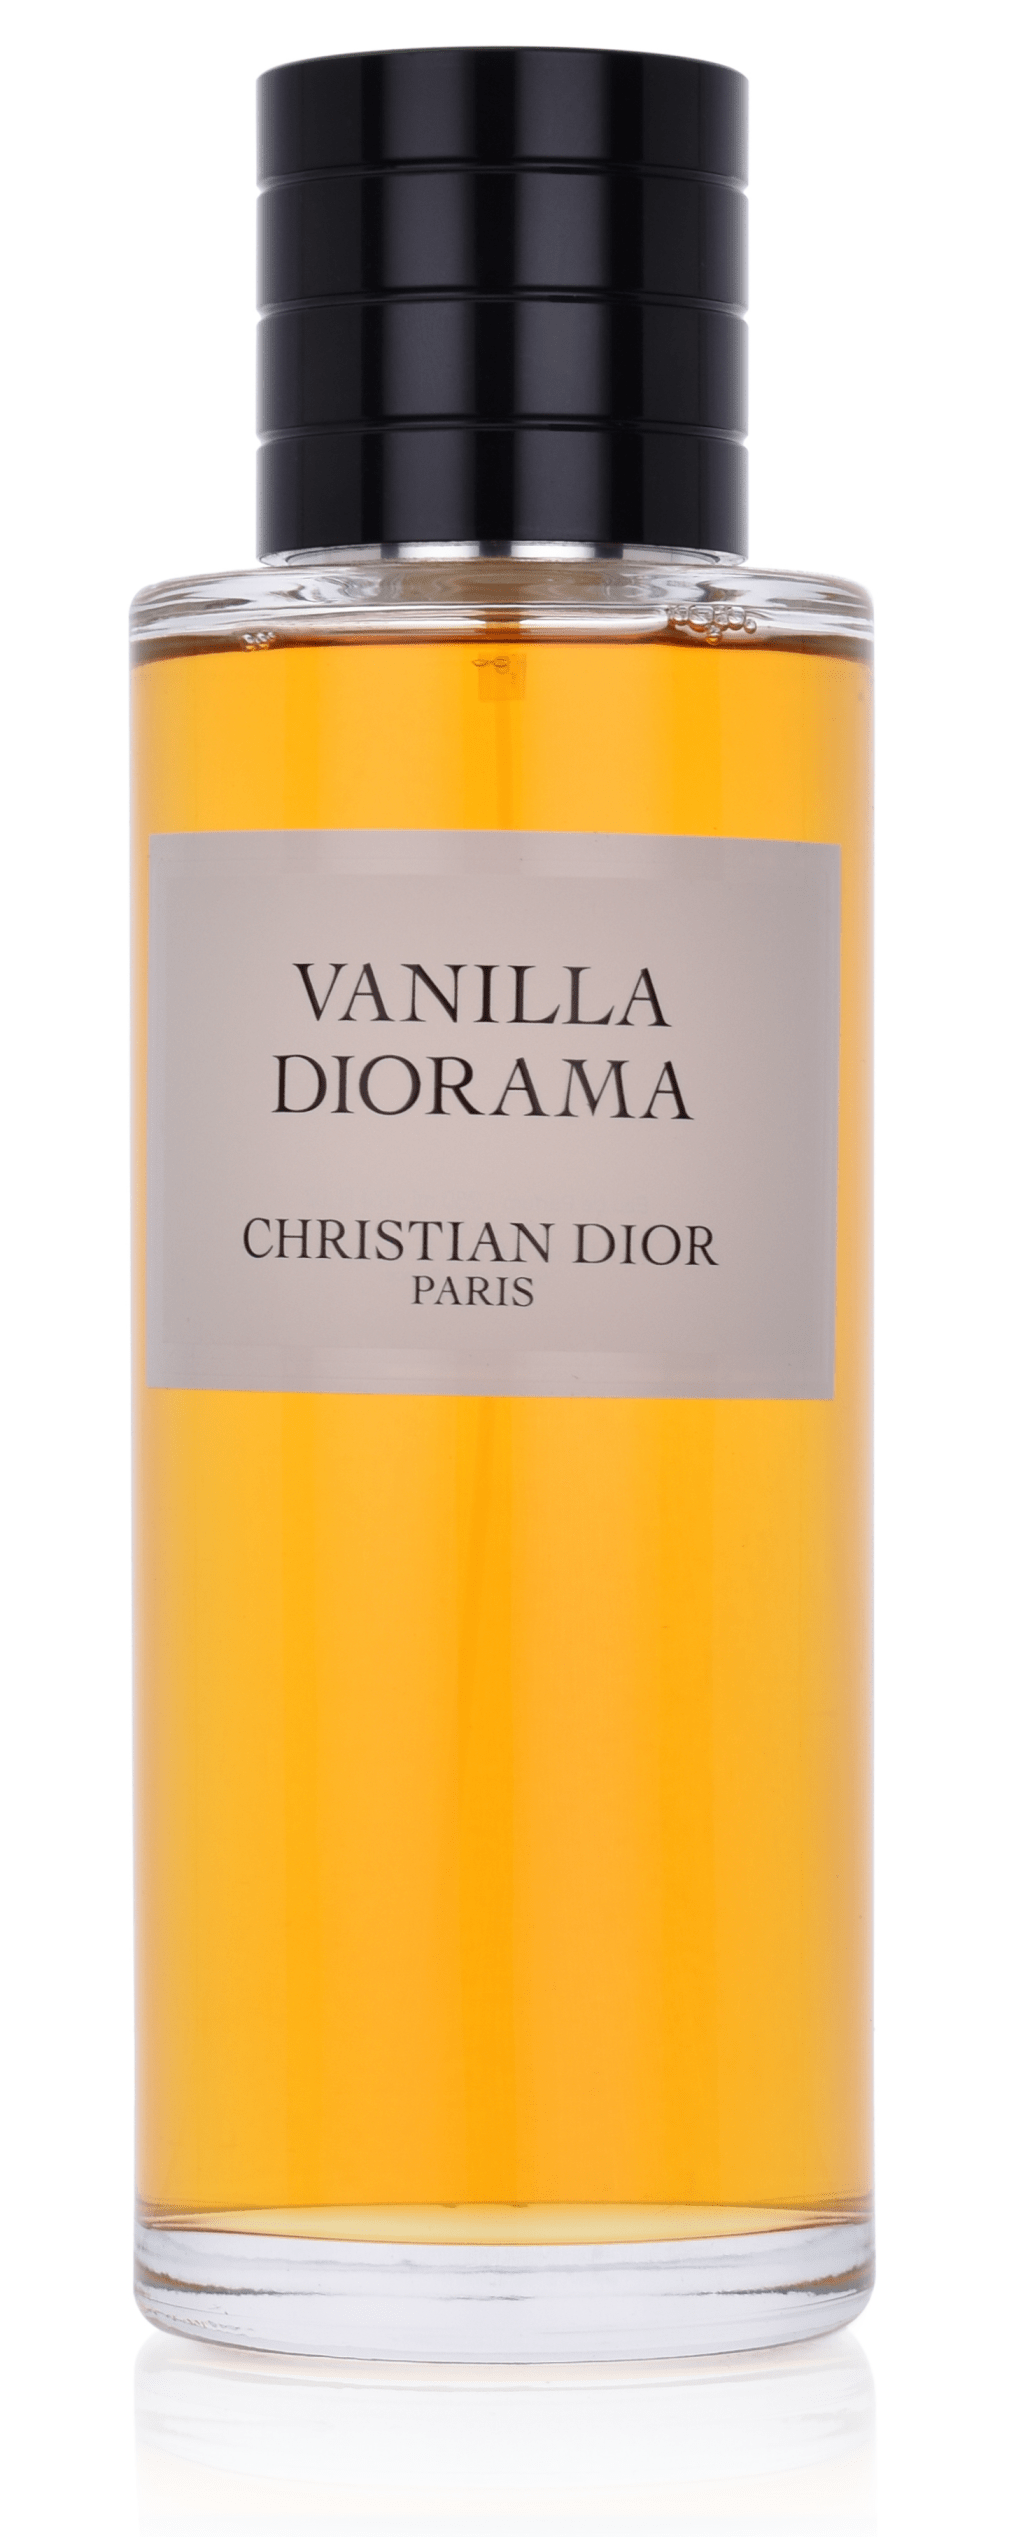 Dior Vanilla Diorama 5 ml Eau de Parfum Abfüllung 